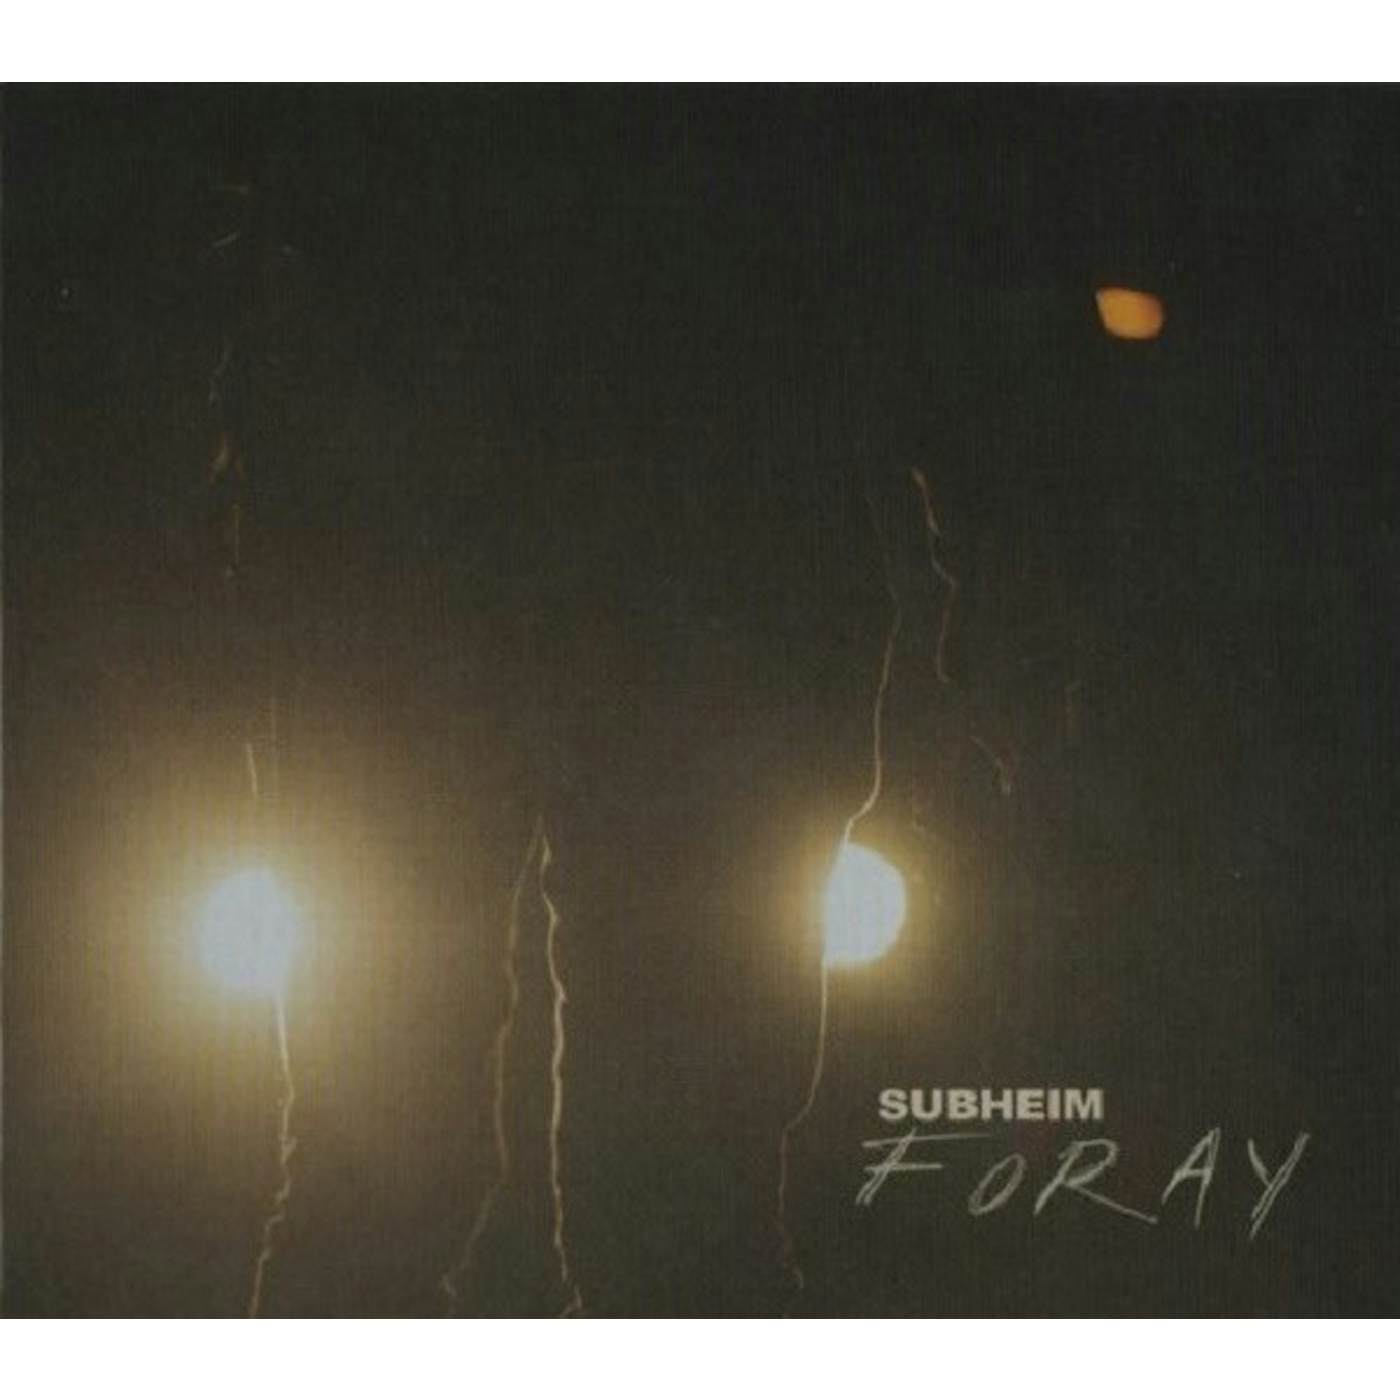 Subheim Foray Vinyl Record